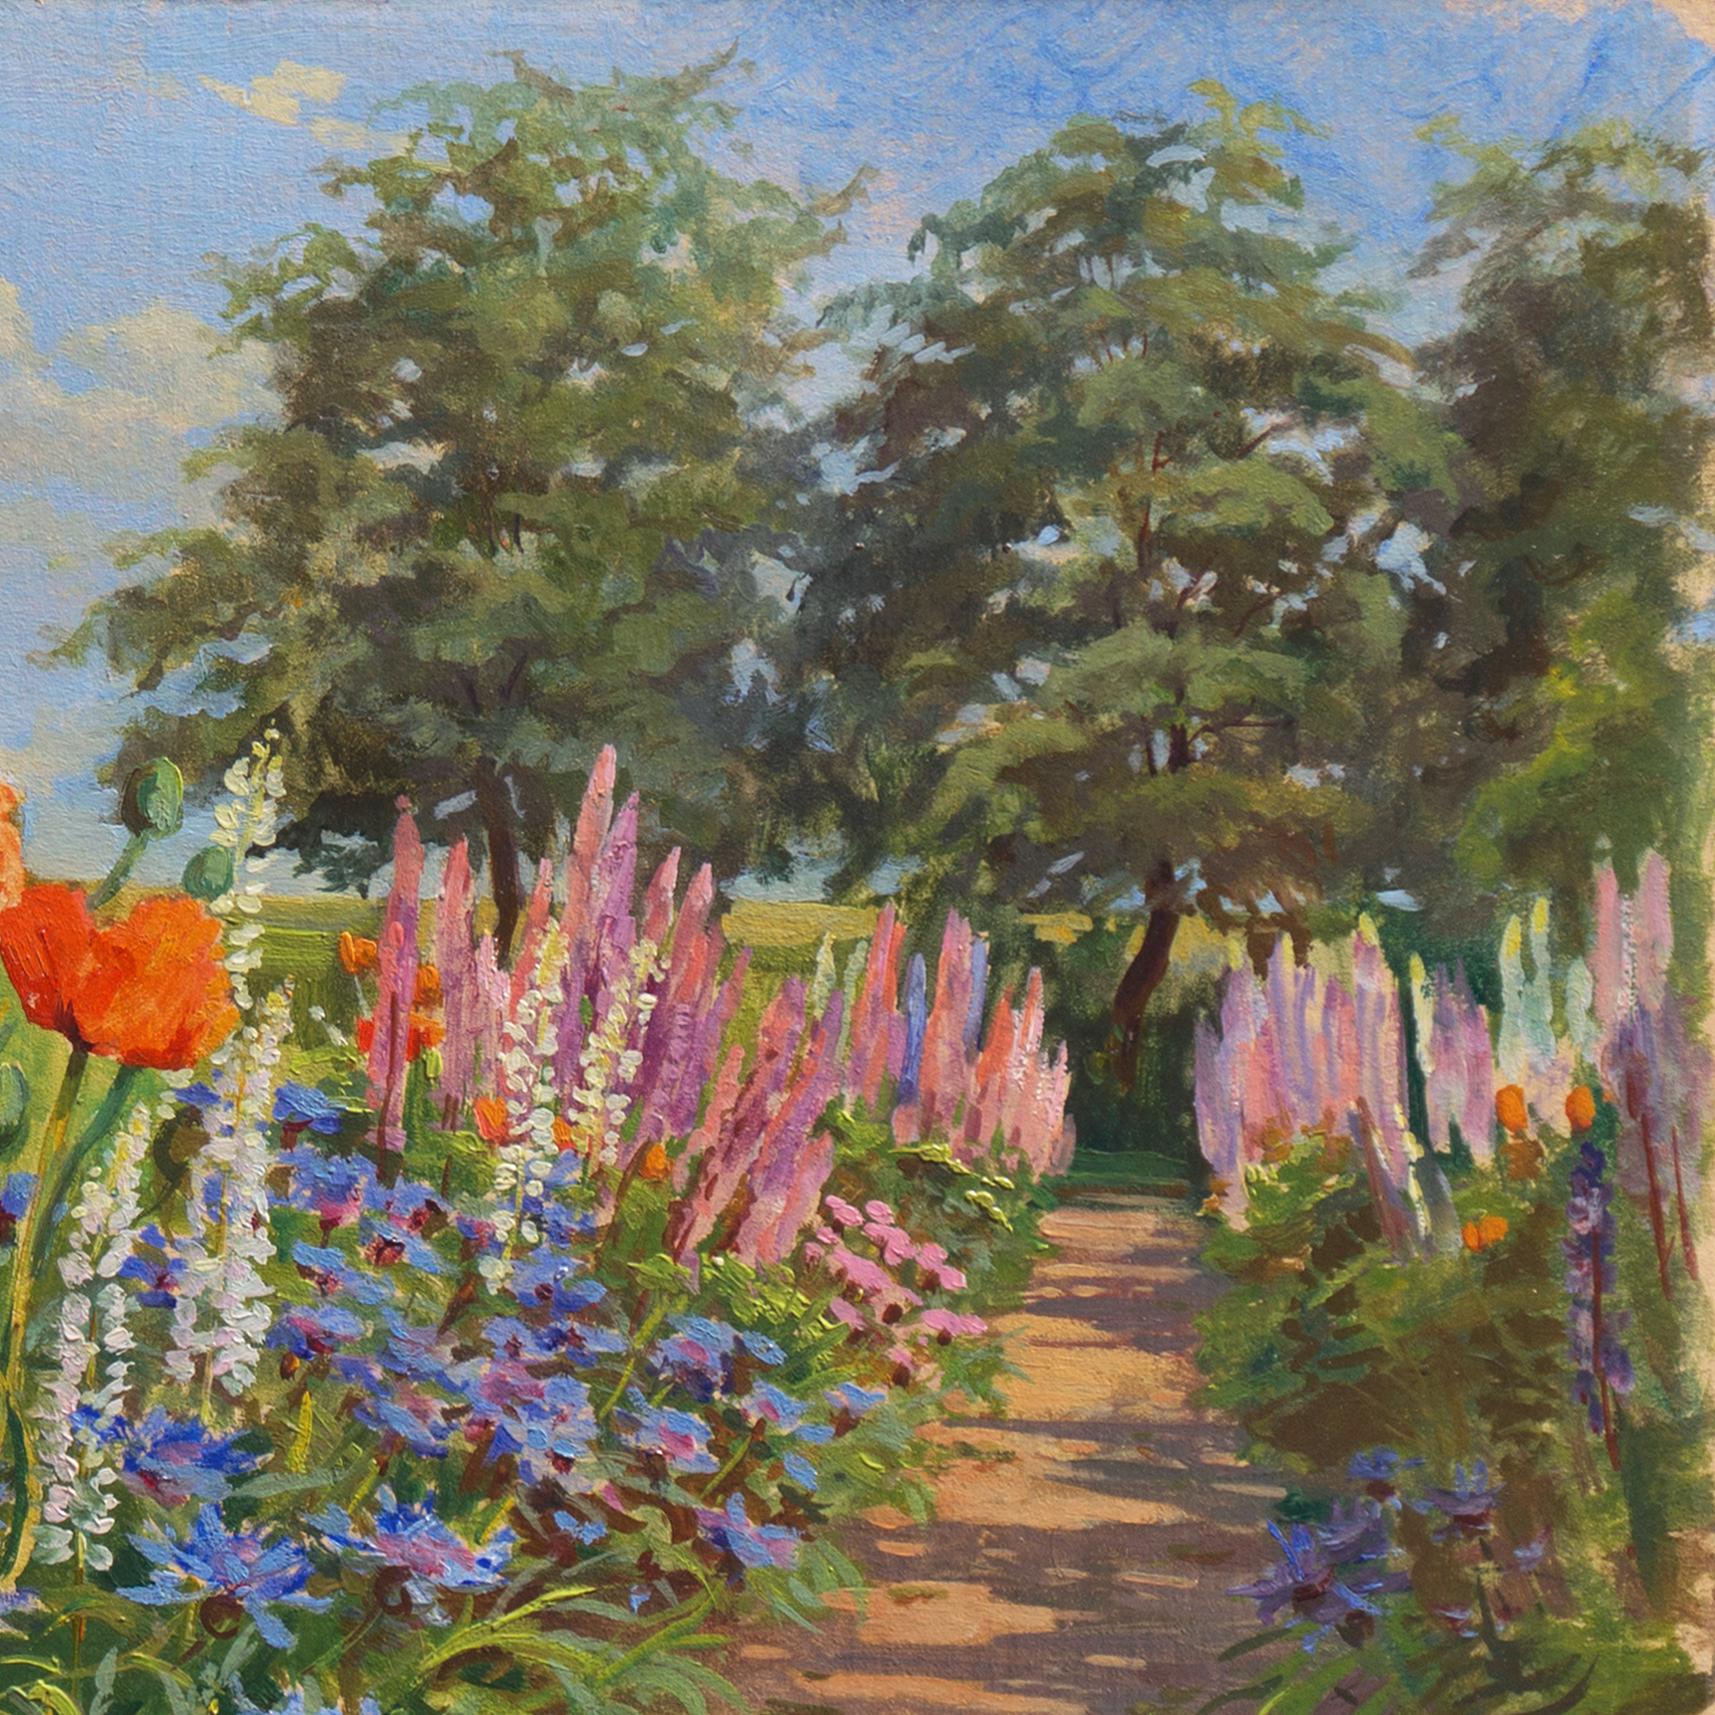 « Le jardin de la ferme de Knudsminde », tsar Nicolas II, reine Elizabeth II, russe - Impressionnisme Painting par Olga Alexandrovna